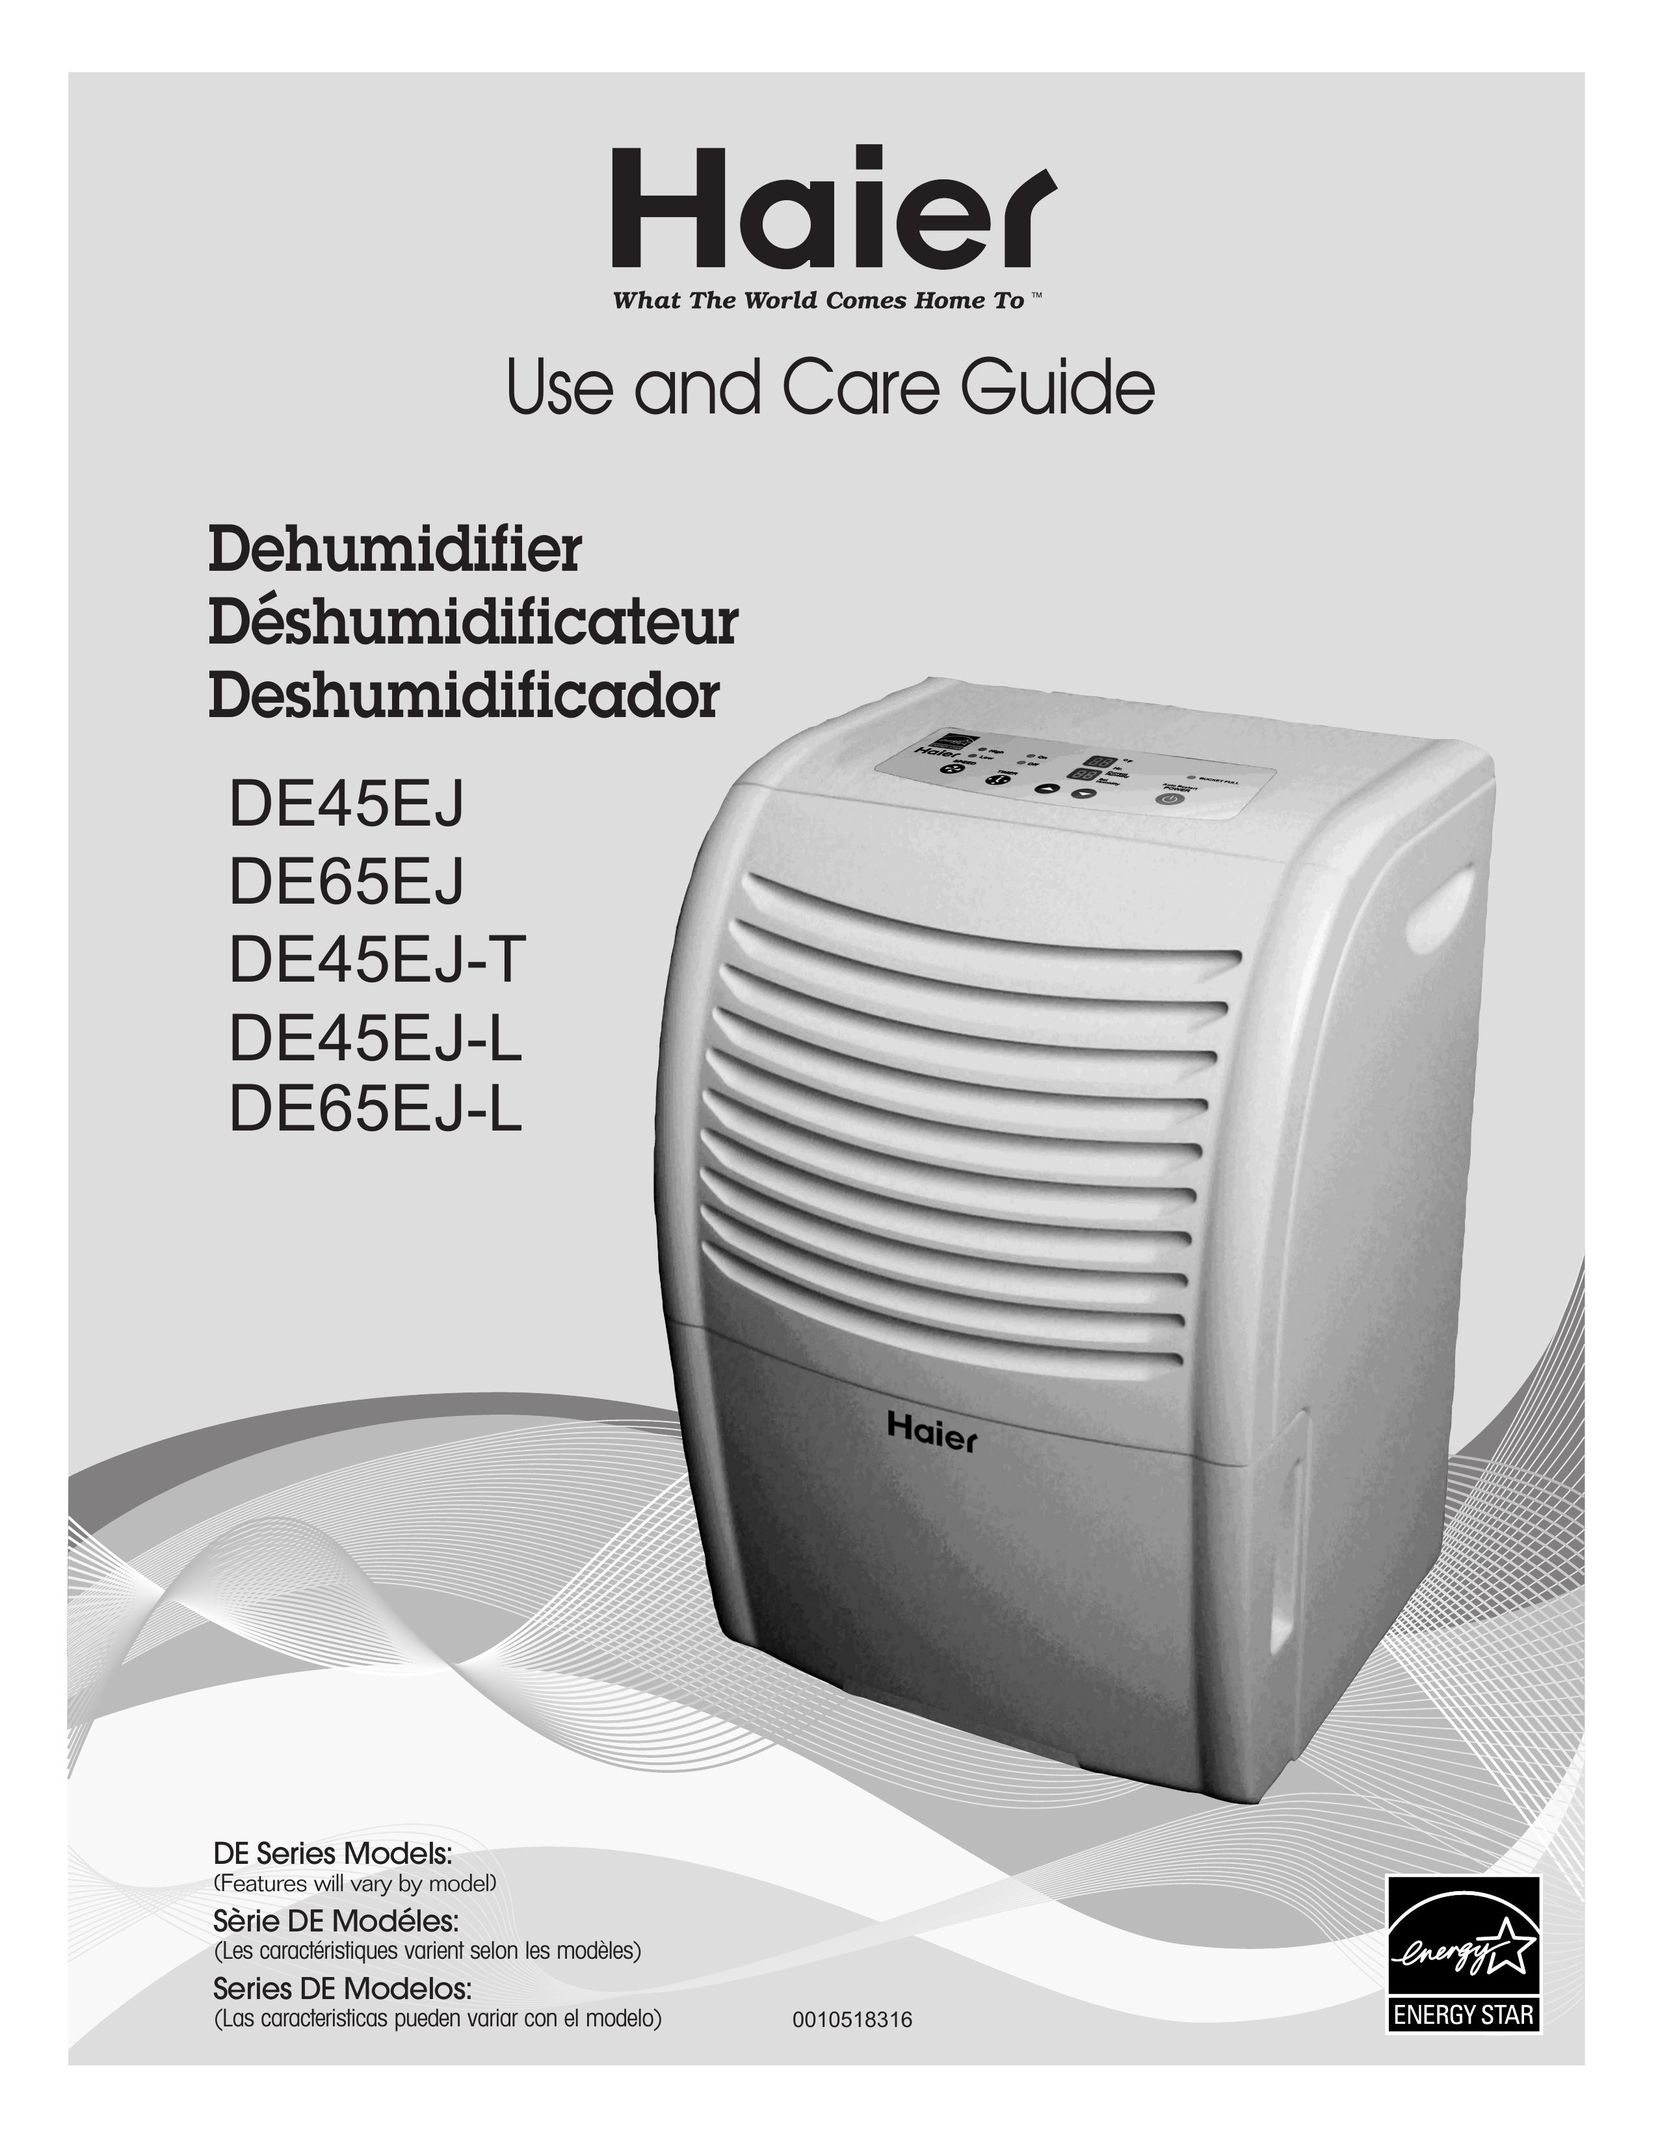 Haier DE45EJ-L Dehumidifier User Manual